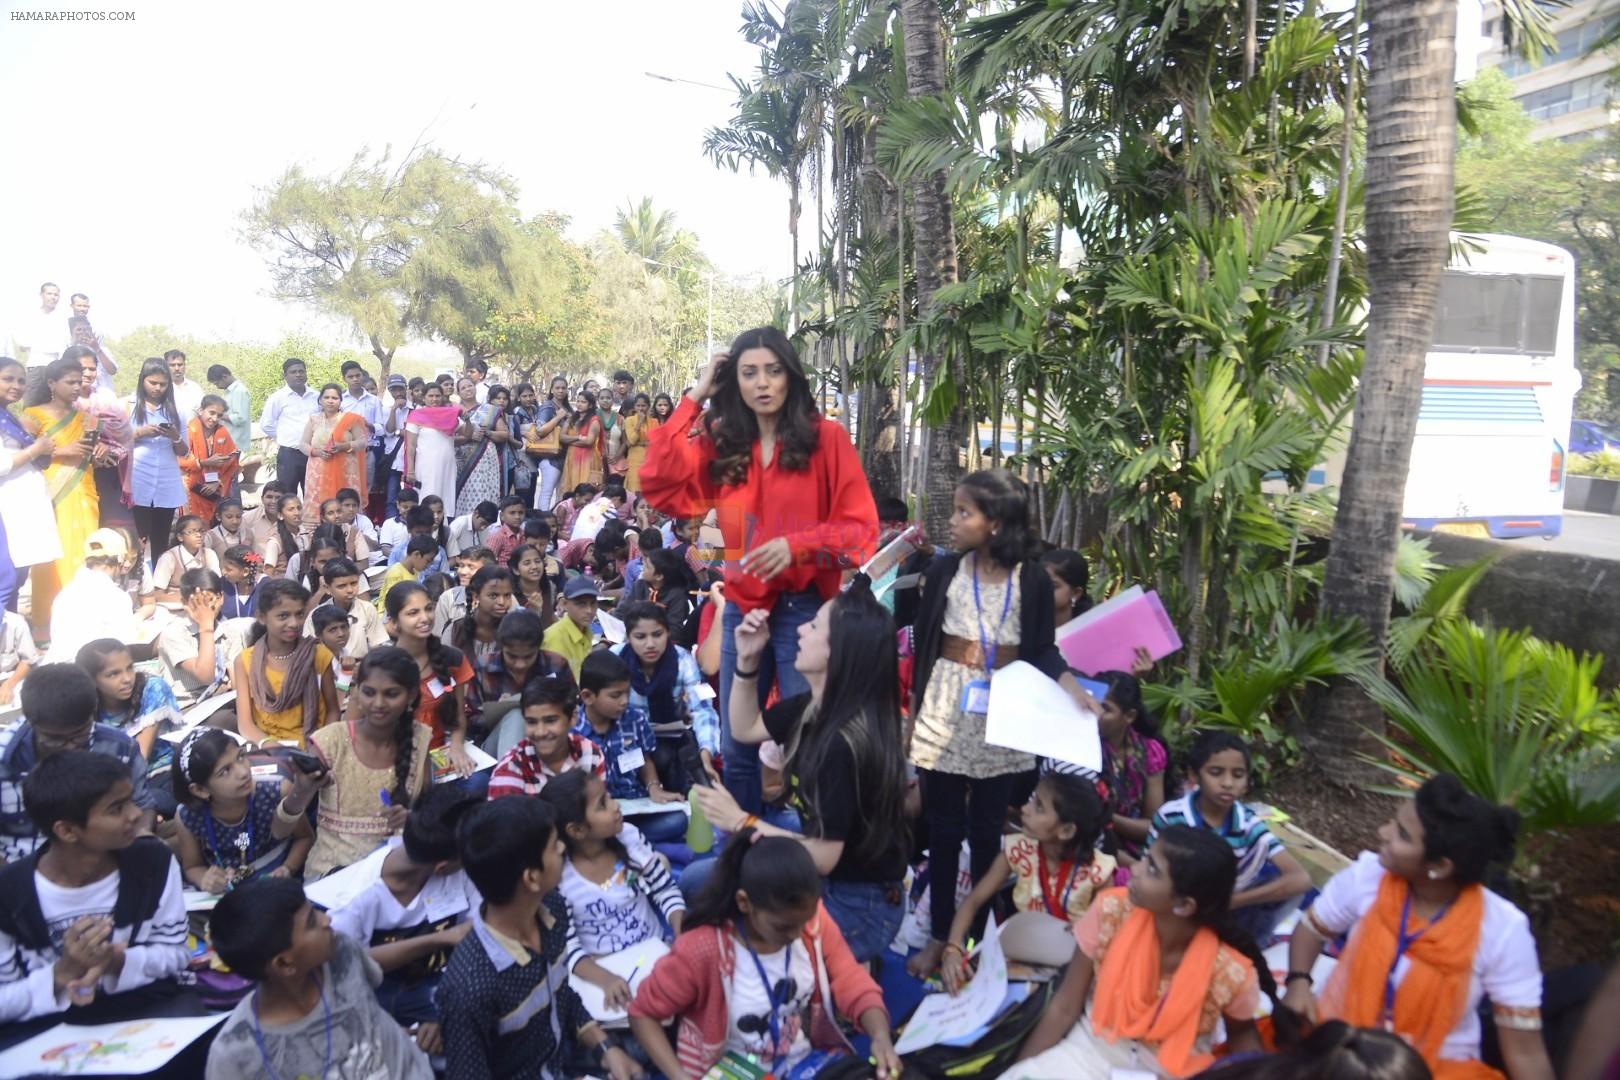 Sushmita Sen Celebrate Republic Day at Rouble Nagi's Art Camp With Kids on 26th Jan 2018